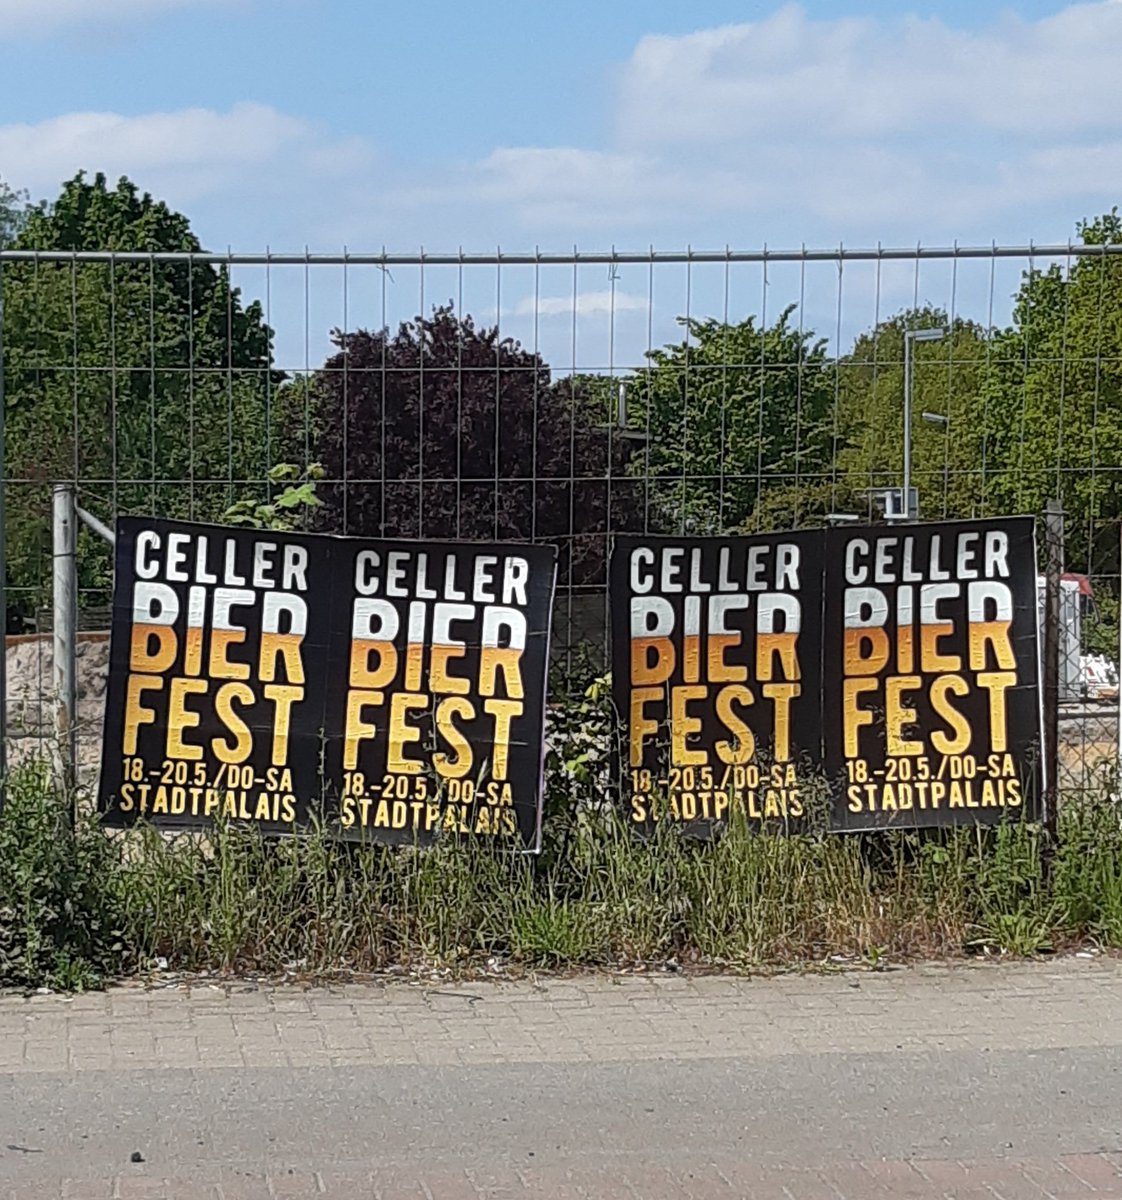 In Celle ist heute #Bierfest.
BIERFEST!
BIIIEEERRRFFEEEESSSSTTT! 
AHHHHHH!
Argh!
#Schlefaz